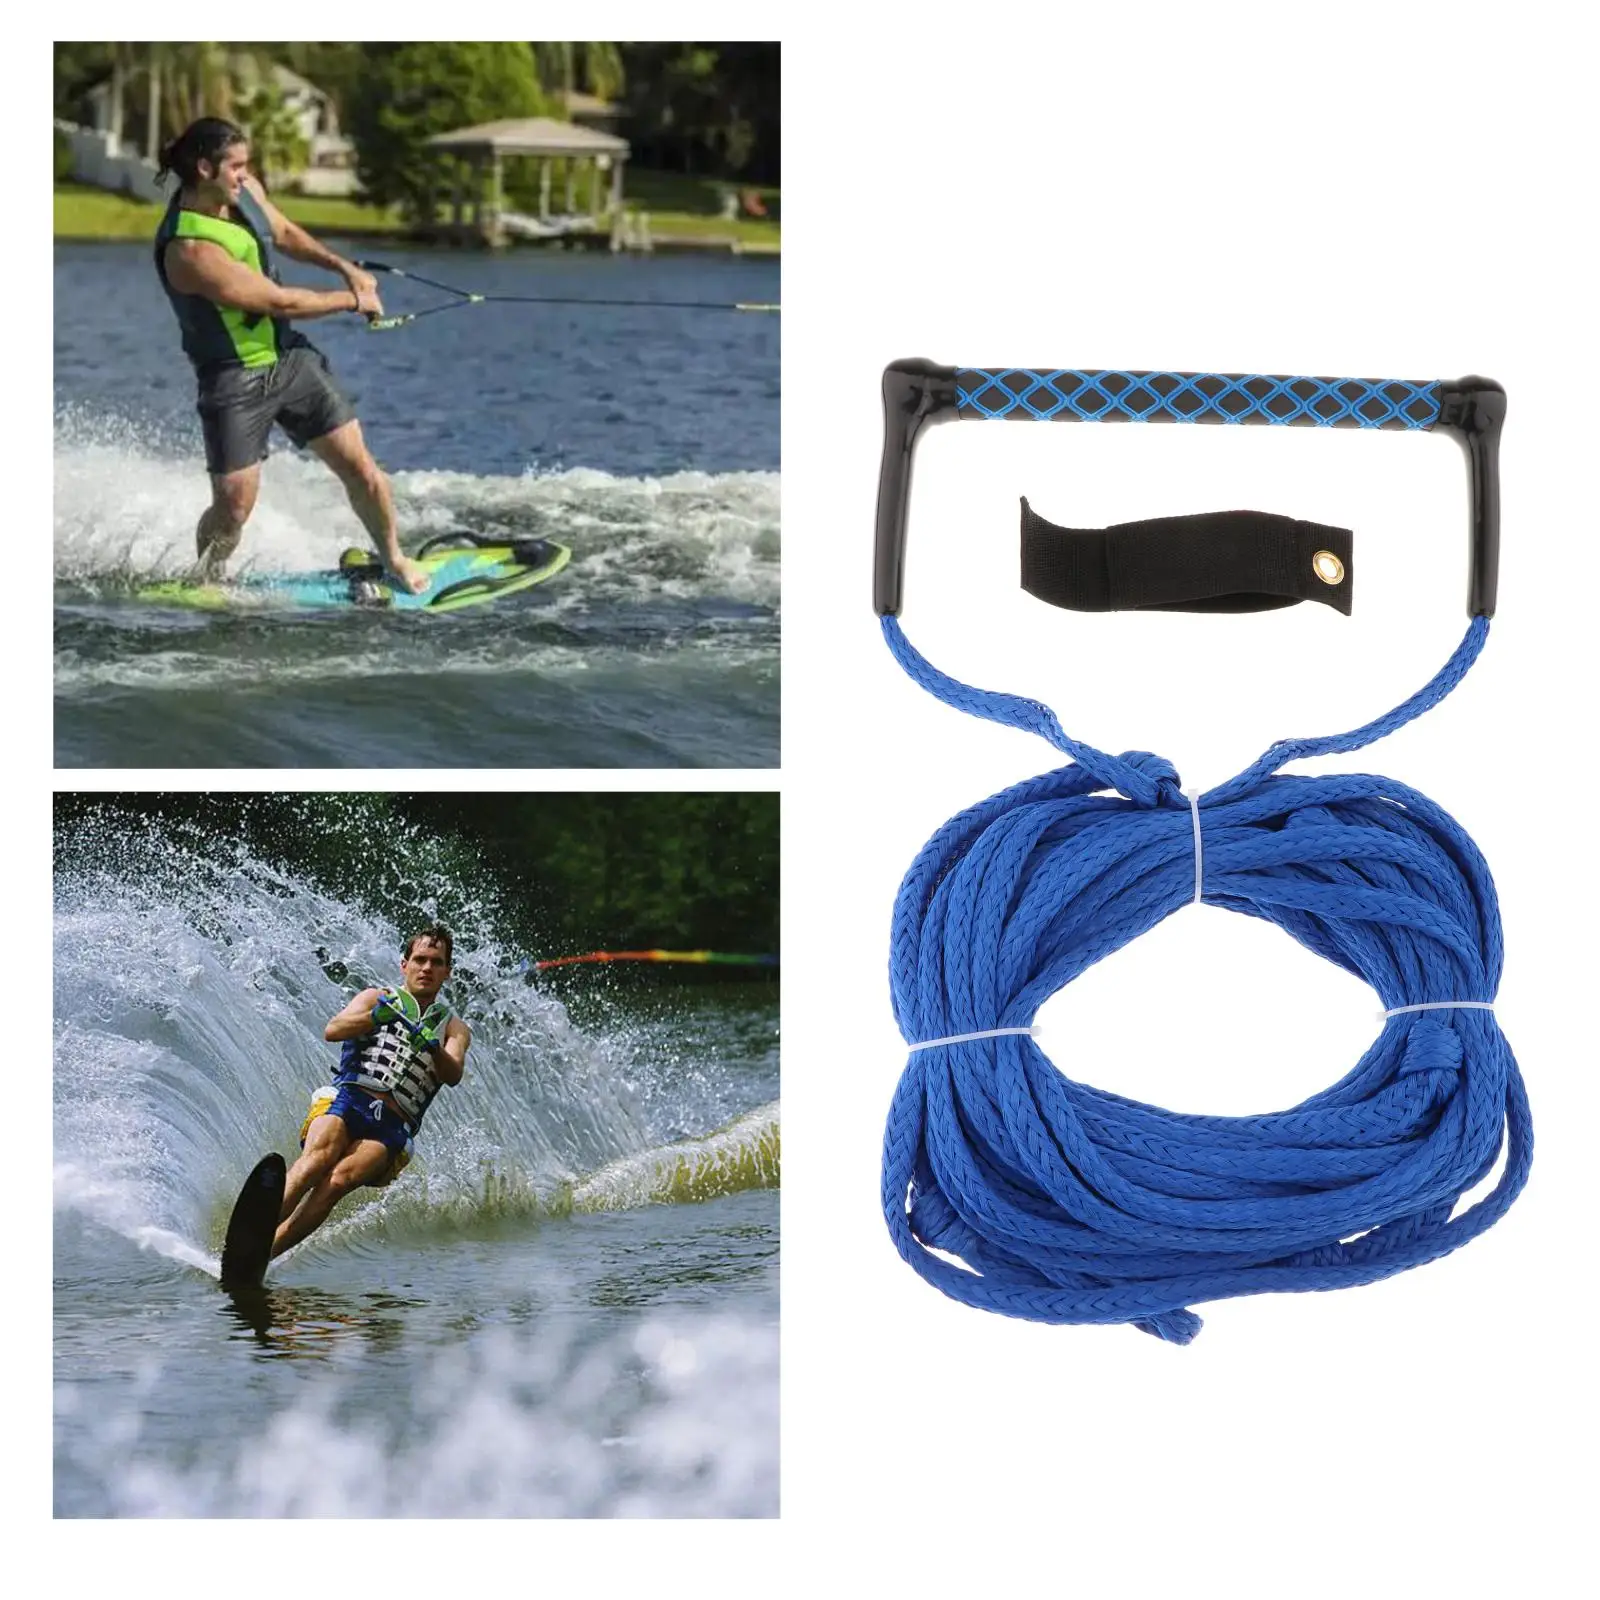 23m Water Ski Rope Safety Surfing Towable Watersport Rope Water Ski Rope with Handle for Wakeboard Kneeboard Wakesurf Sport